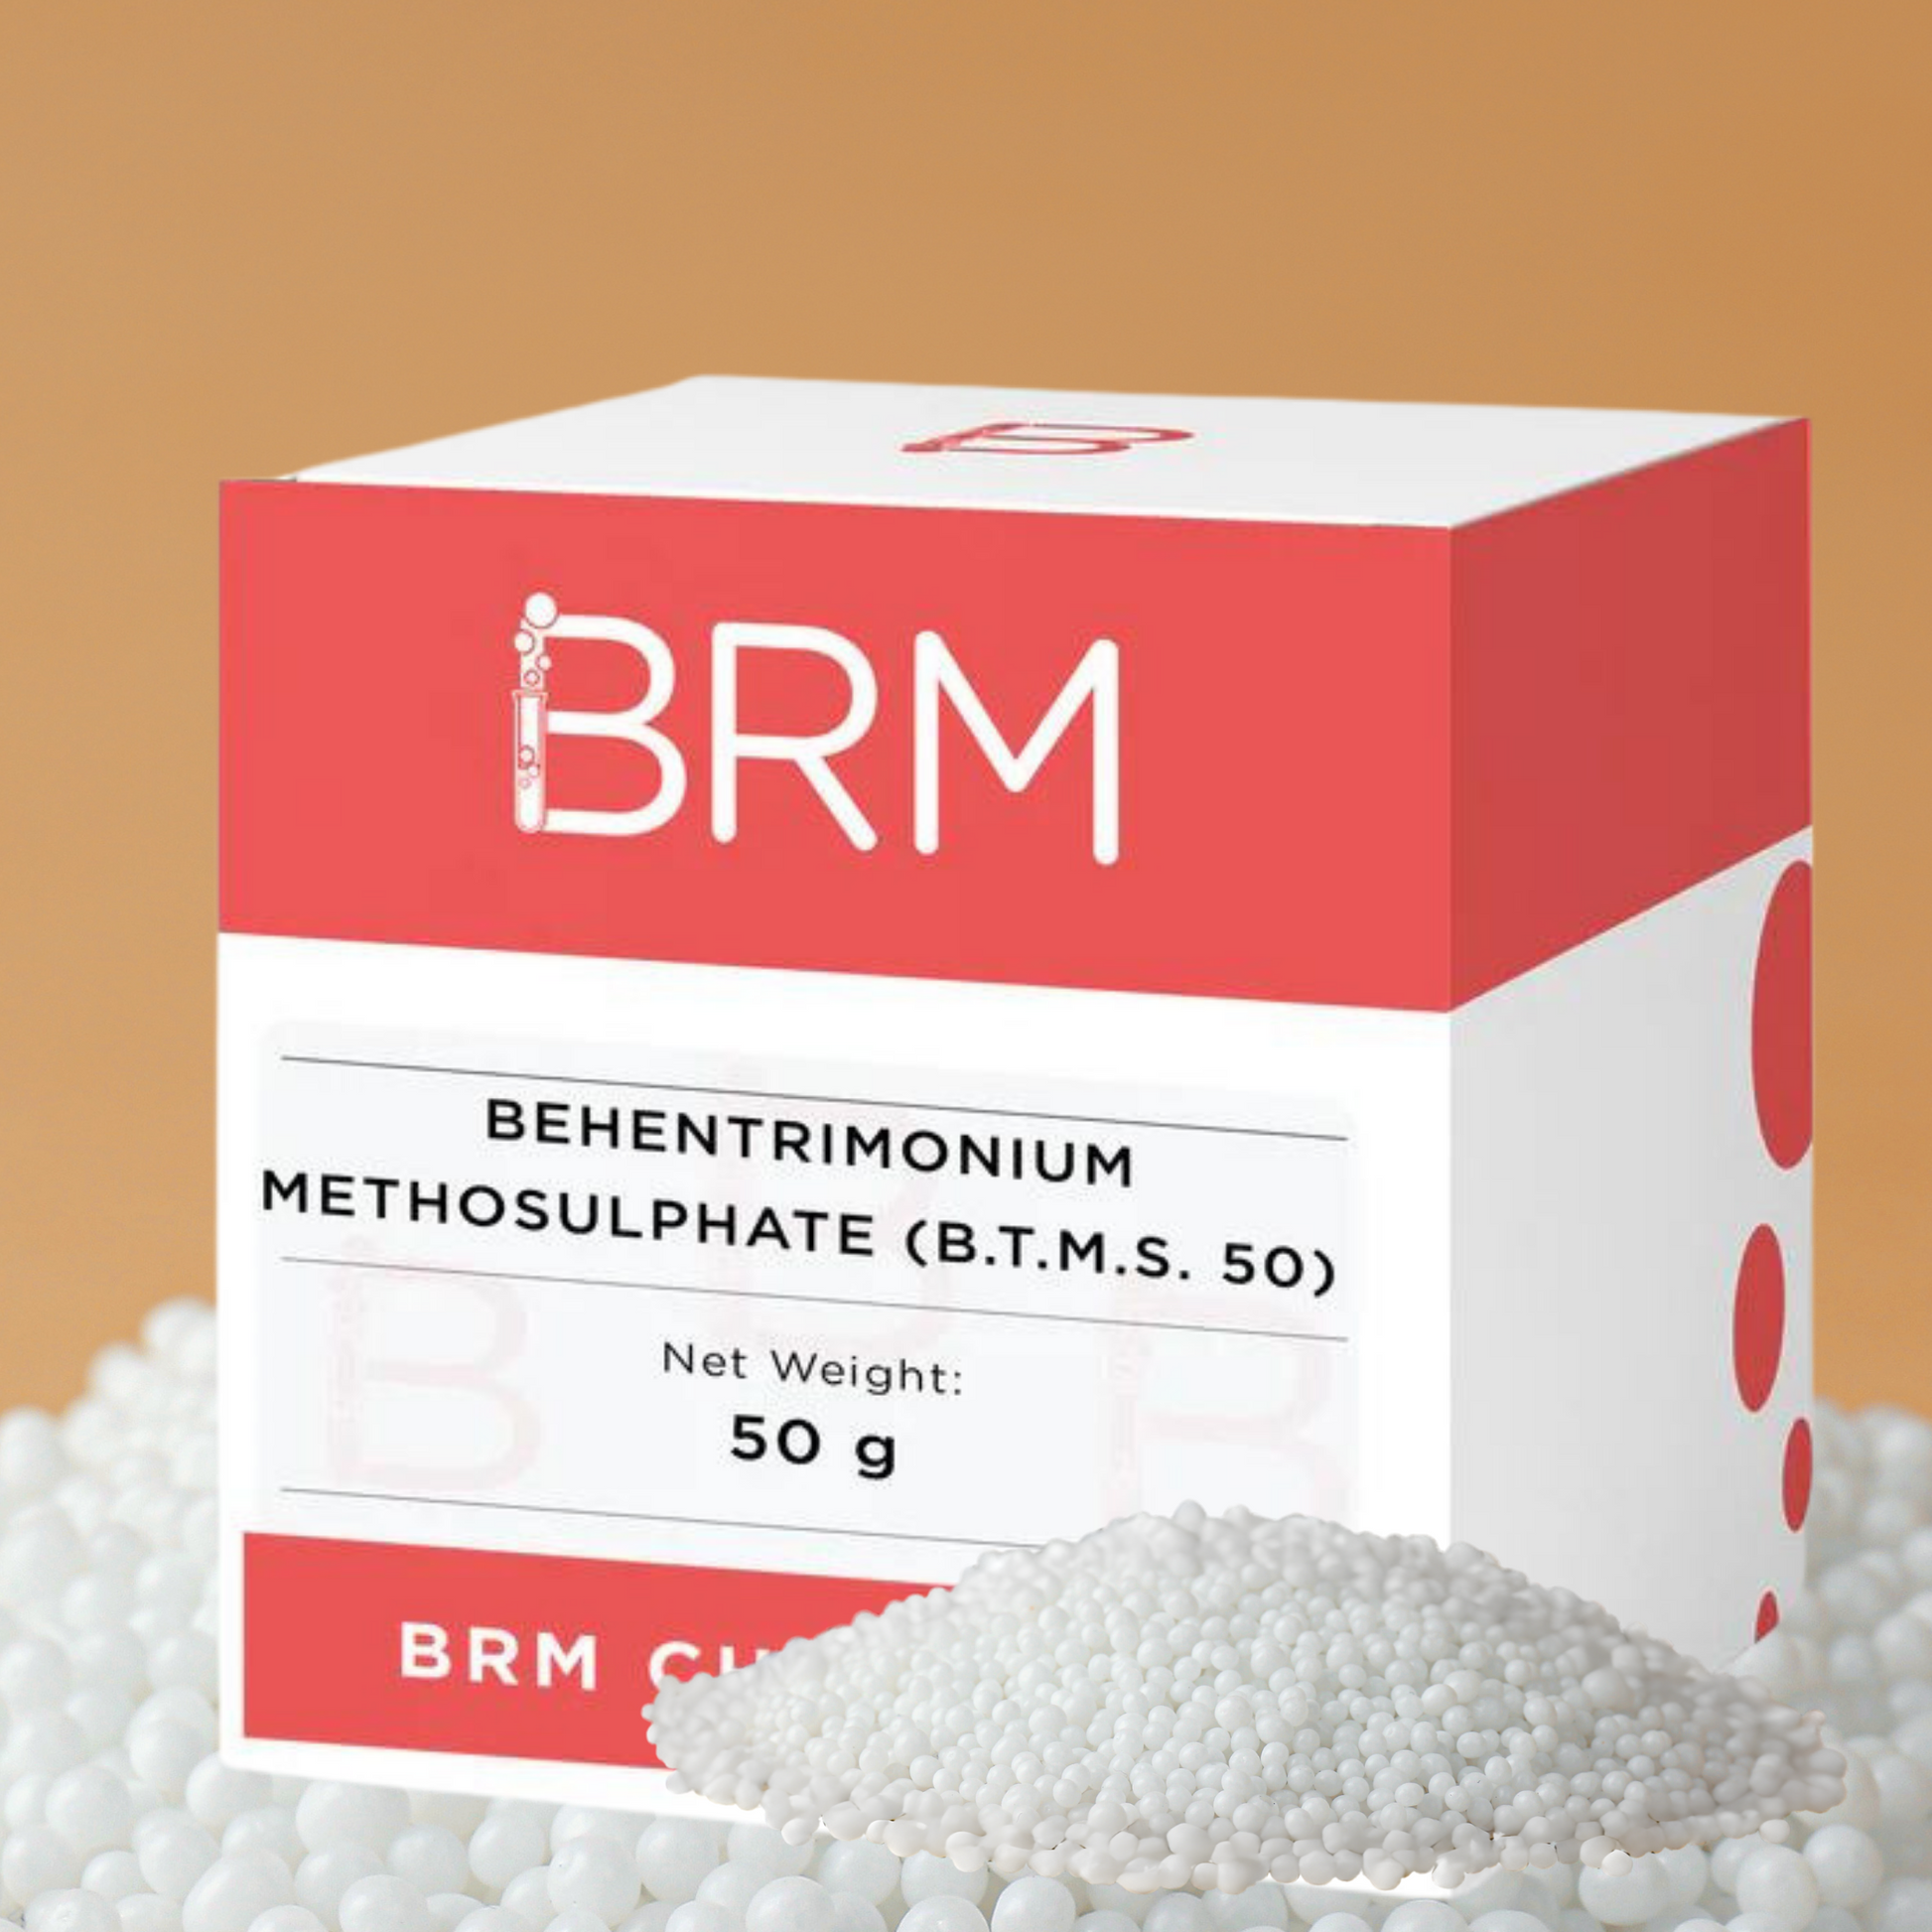 BRM Chemicals BTMS-50 Behentrimonium Methosulfate 50 for Lotion